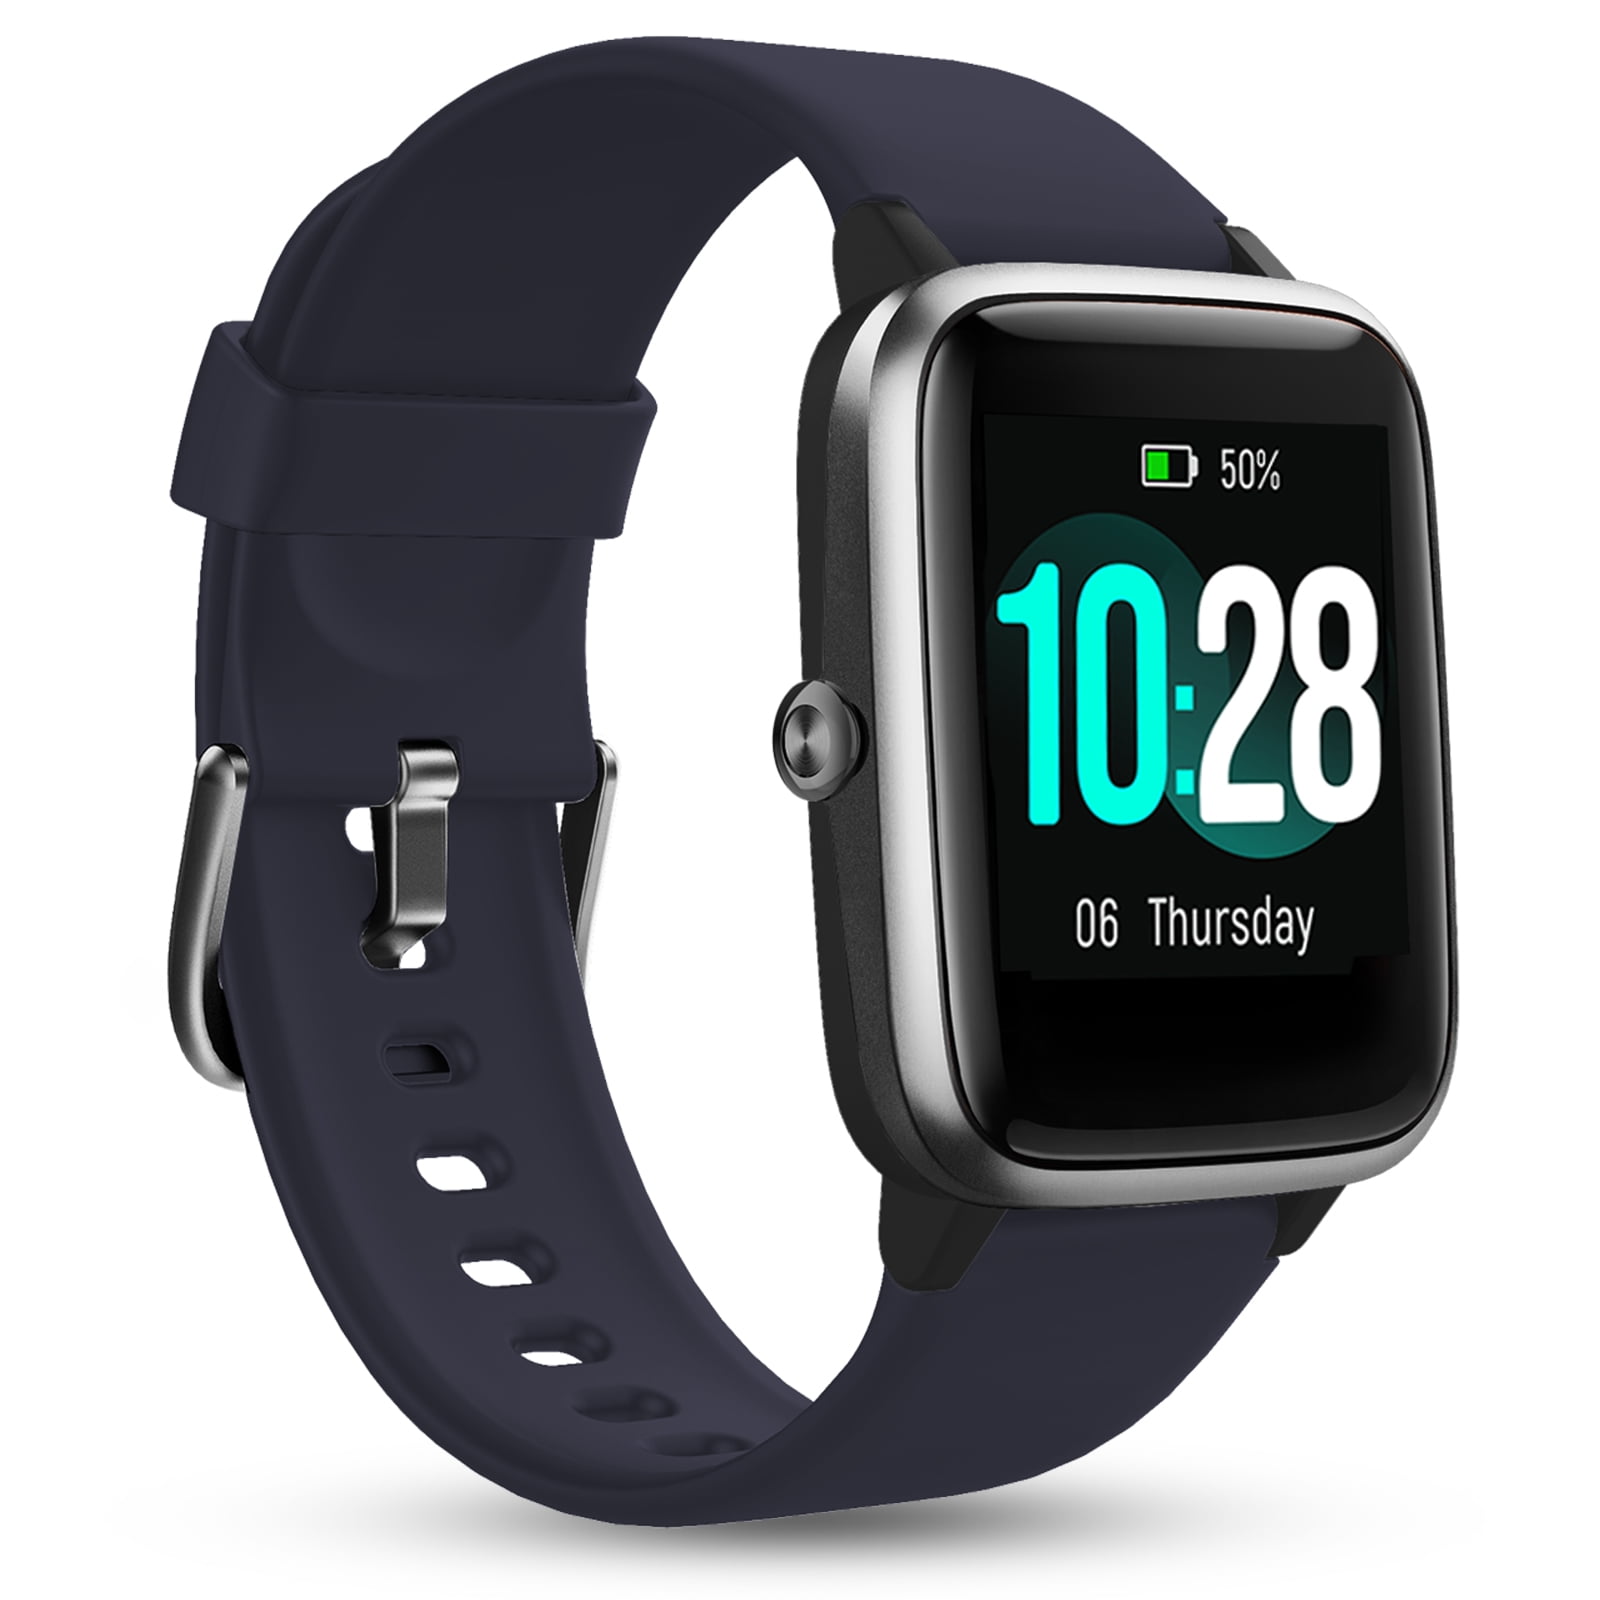 Smart Watch for Android and iPhone, EEEkit Fitness Tracker Health Tracker IP68 Waterproof Smartwatch for Women Men